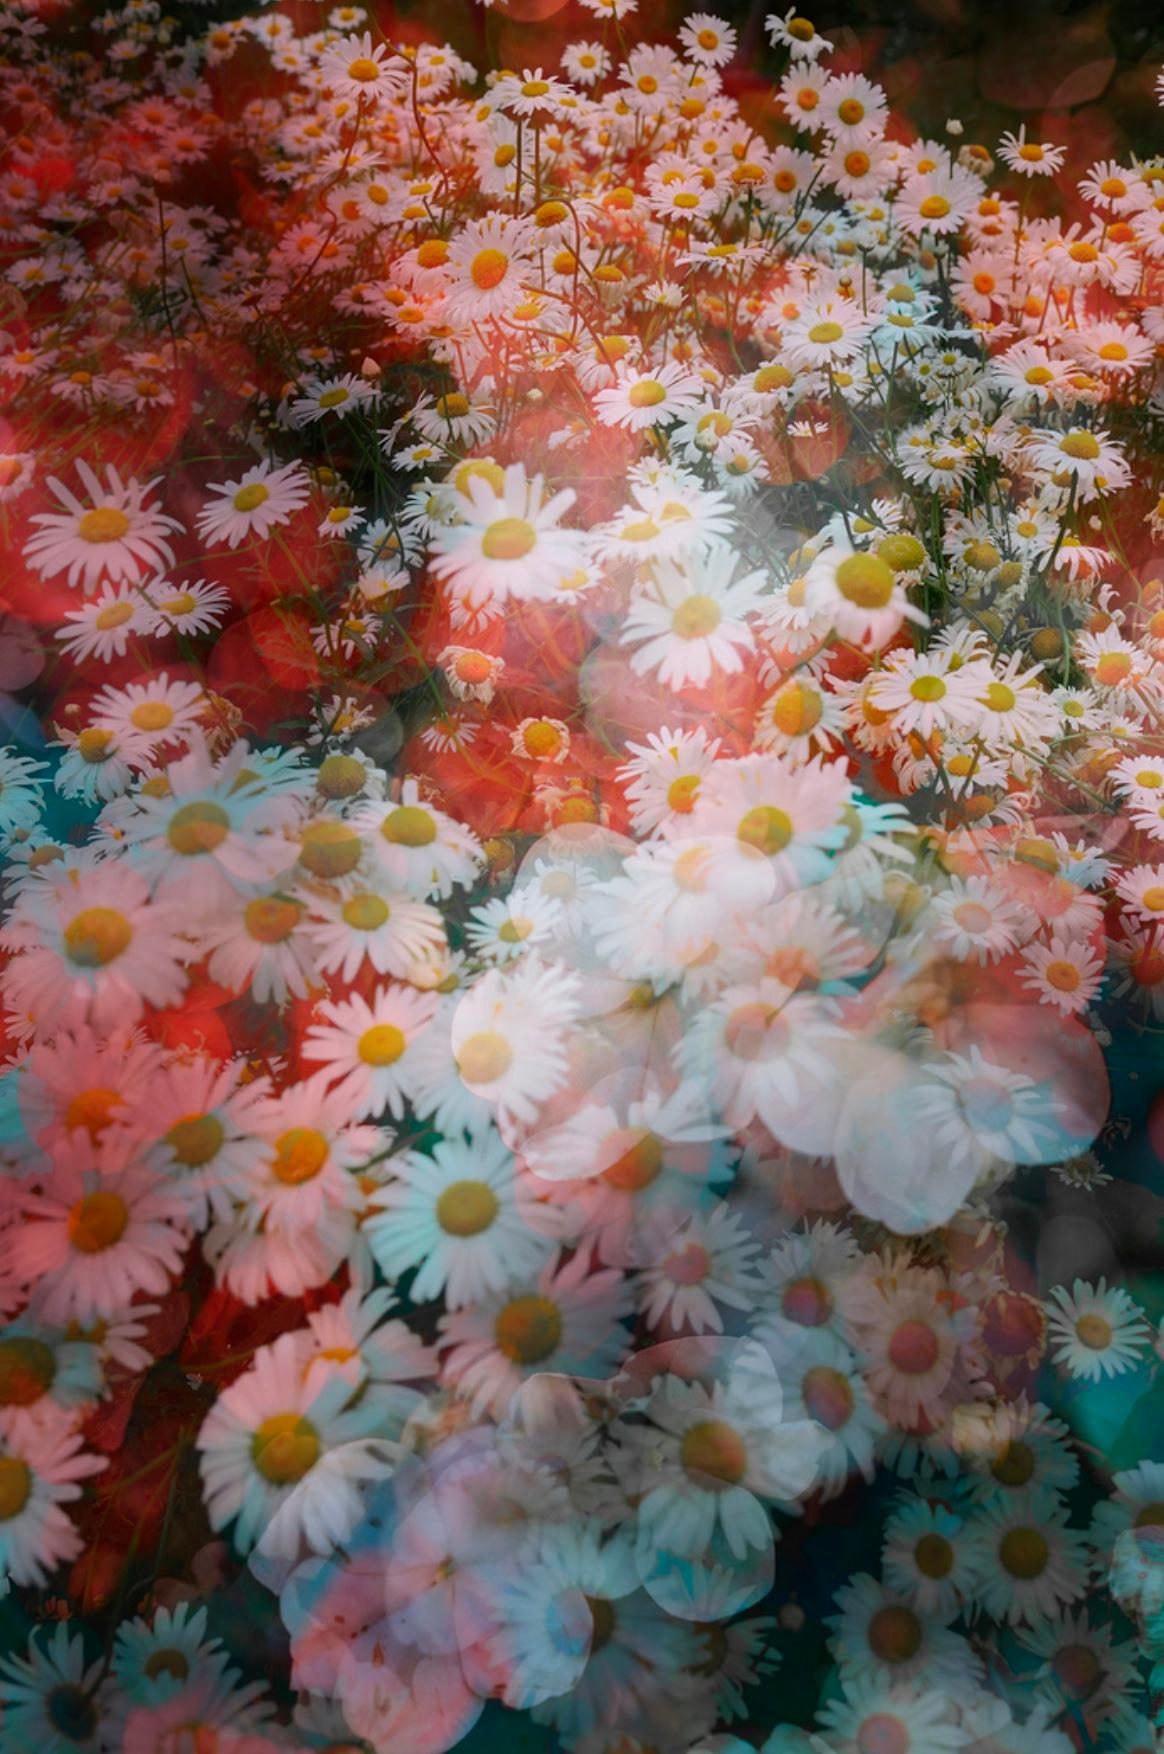 David Burdeny - In Bloom 02, Kunming, China, Photography 2019